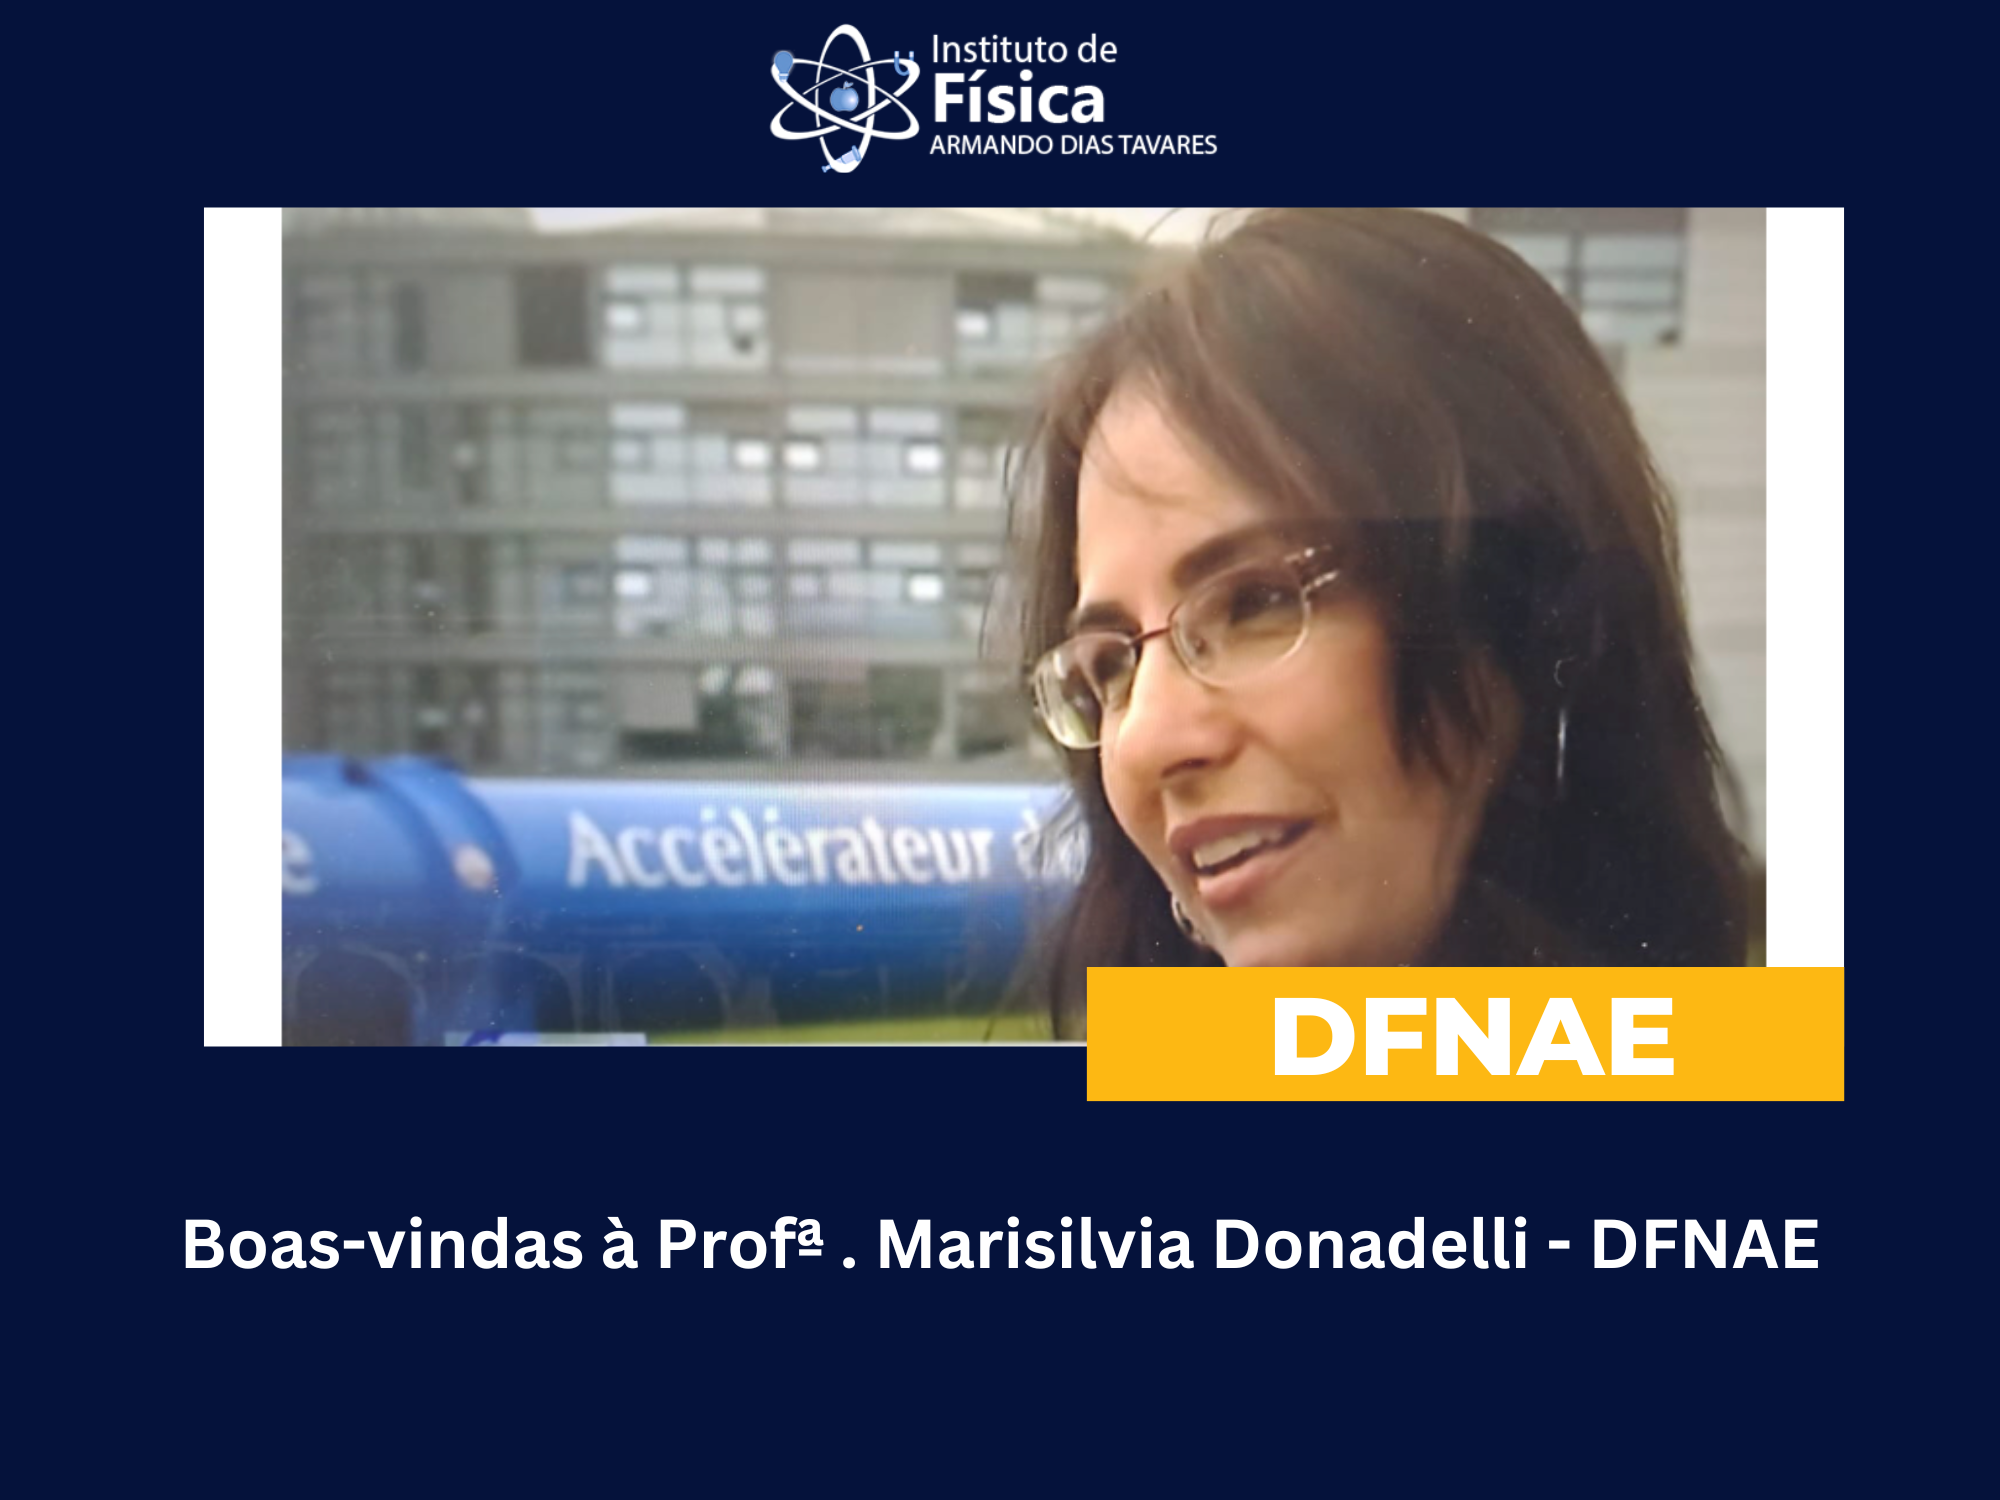 Boas-vindas à Profª. Marisilvia Donadelli – DFNAE